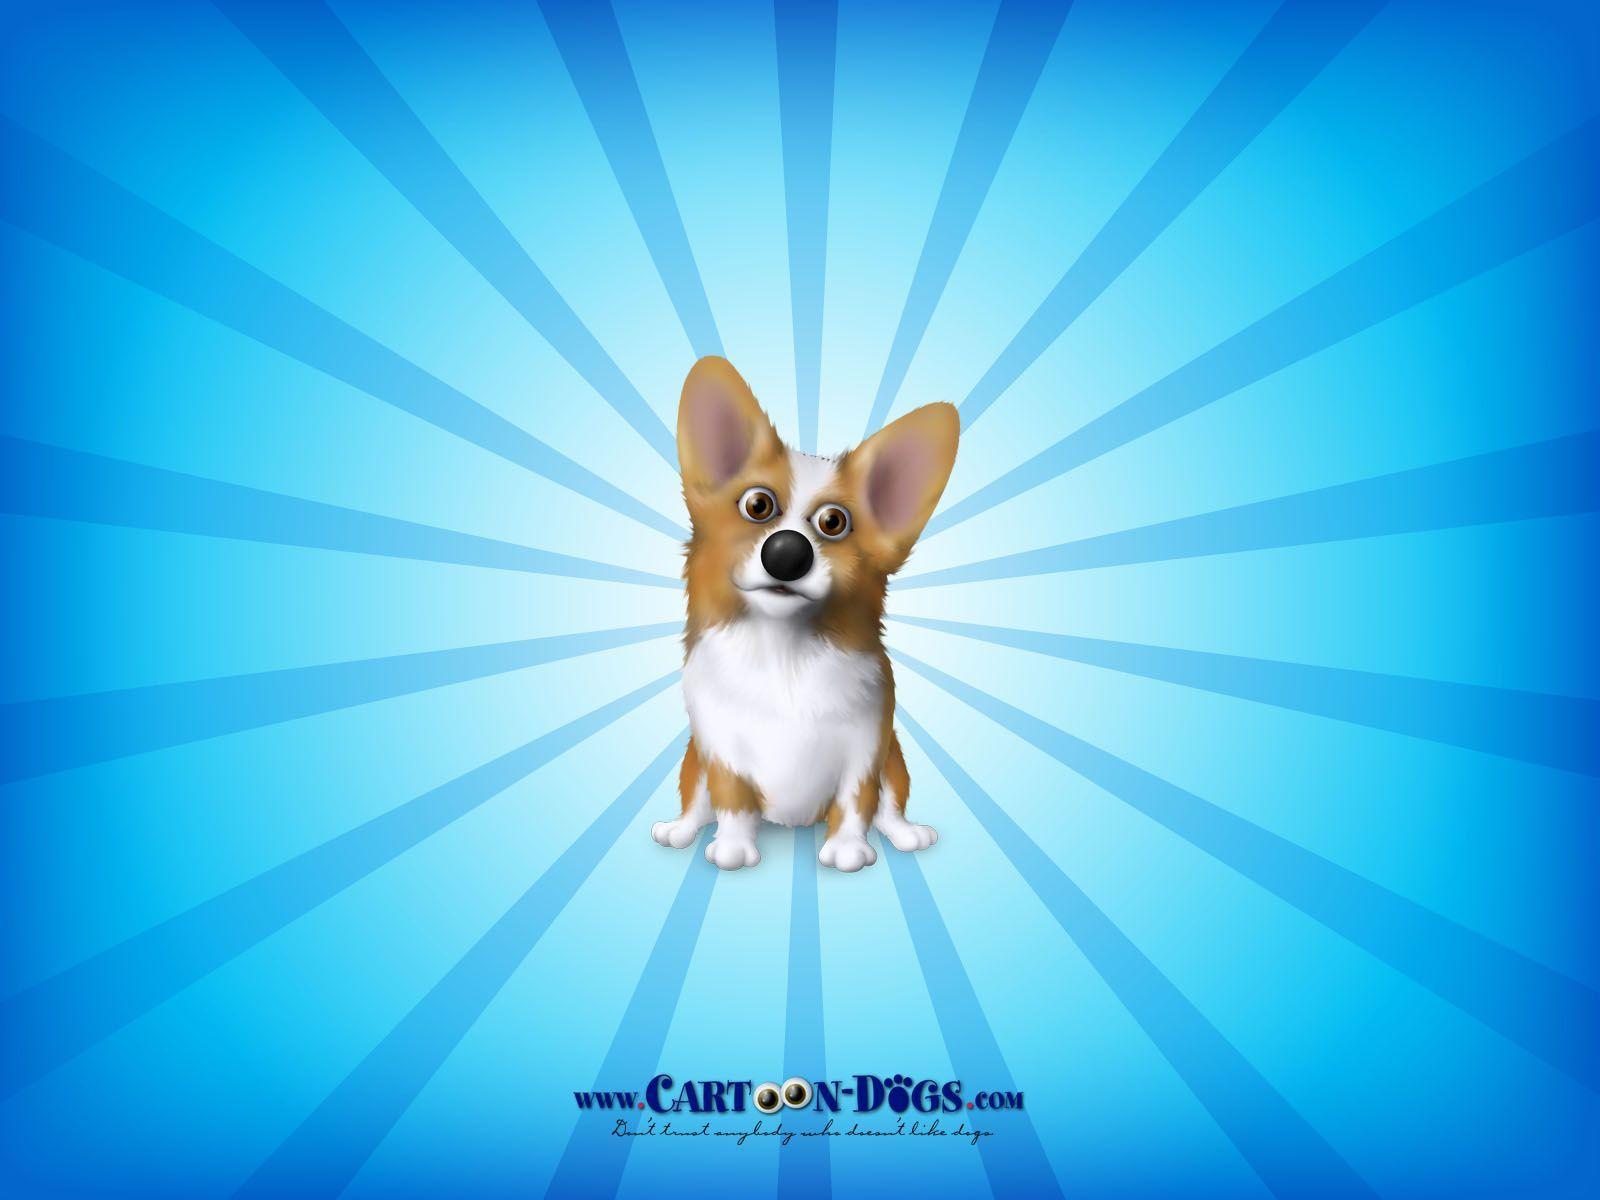 Pembroke Welsh Corgi by Cartoon Dogs: Free downloads avatars